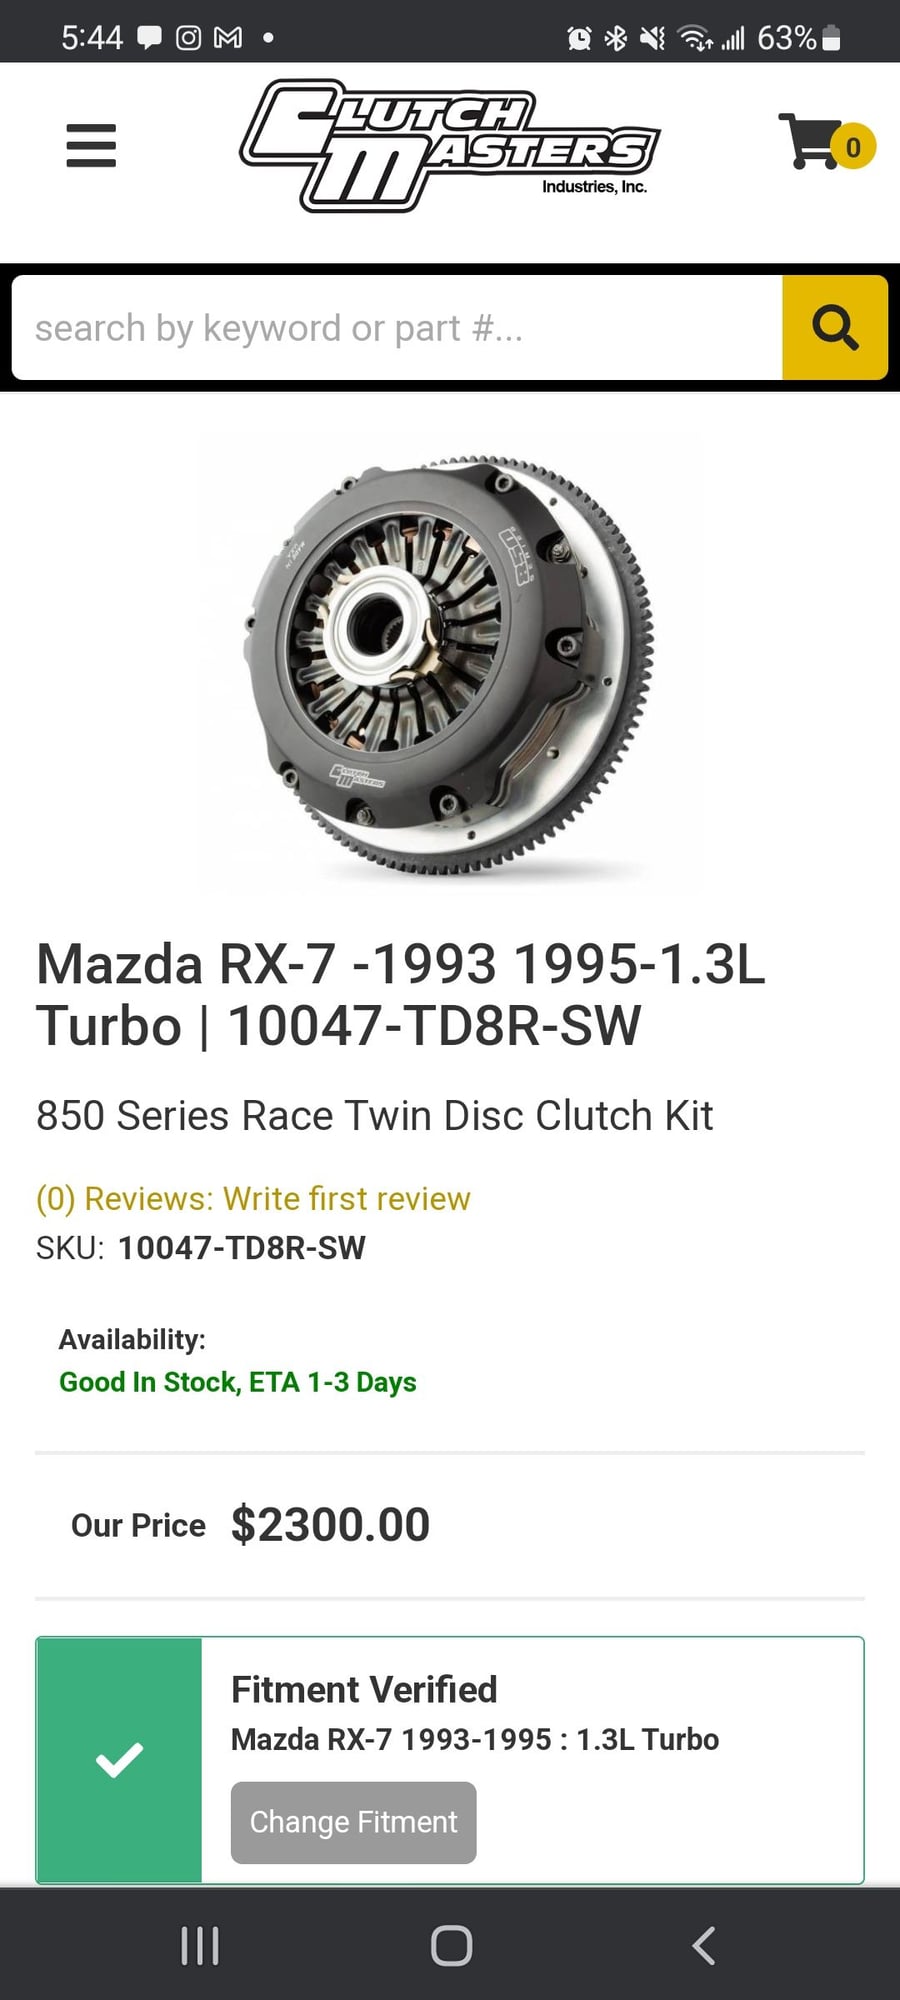 Drivetrain - Clutchmaster Twin Disc clutch kit - New - 1993 to 2002 Mazda RX-7 - Arlington, TX 76001, United States